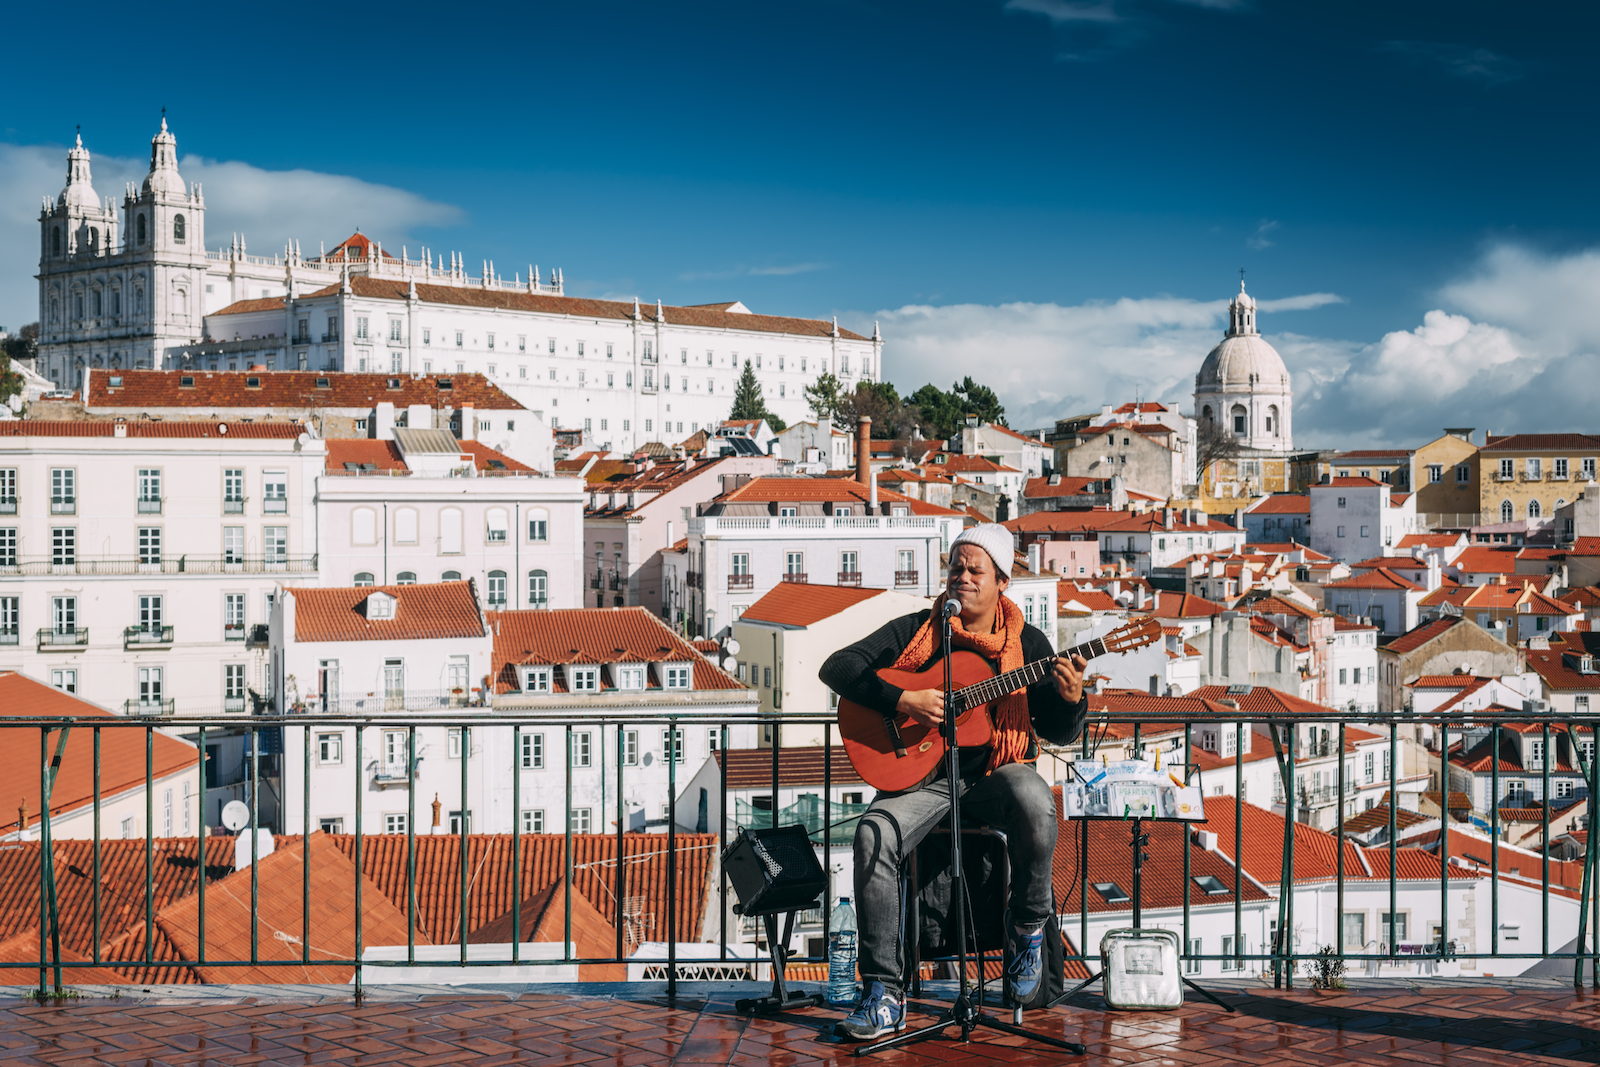 Lisbon, Portugal view